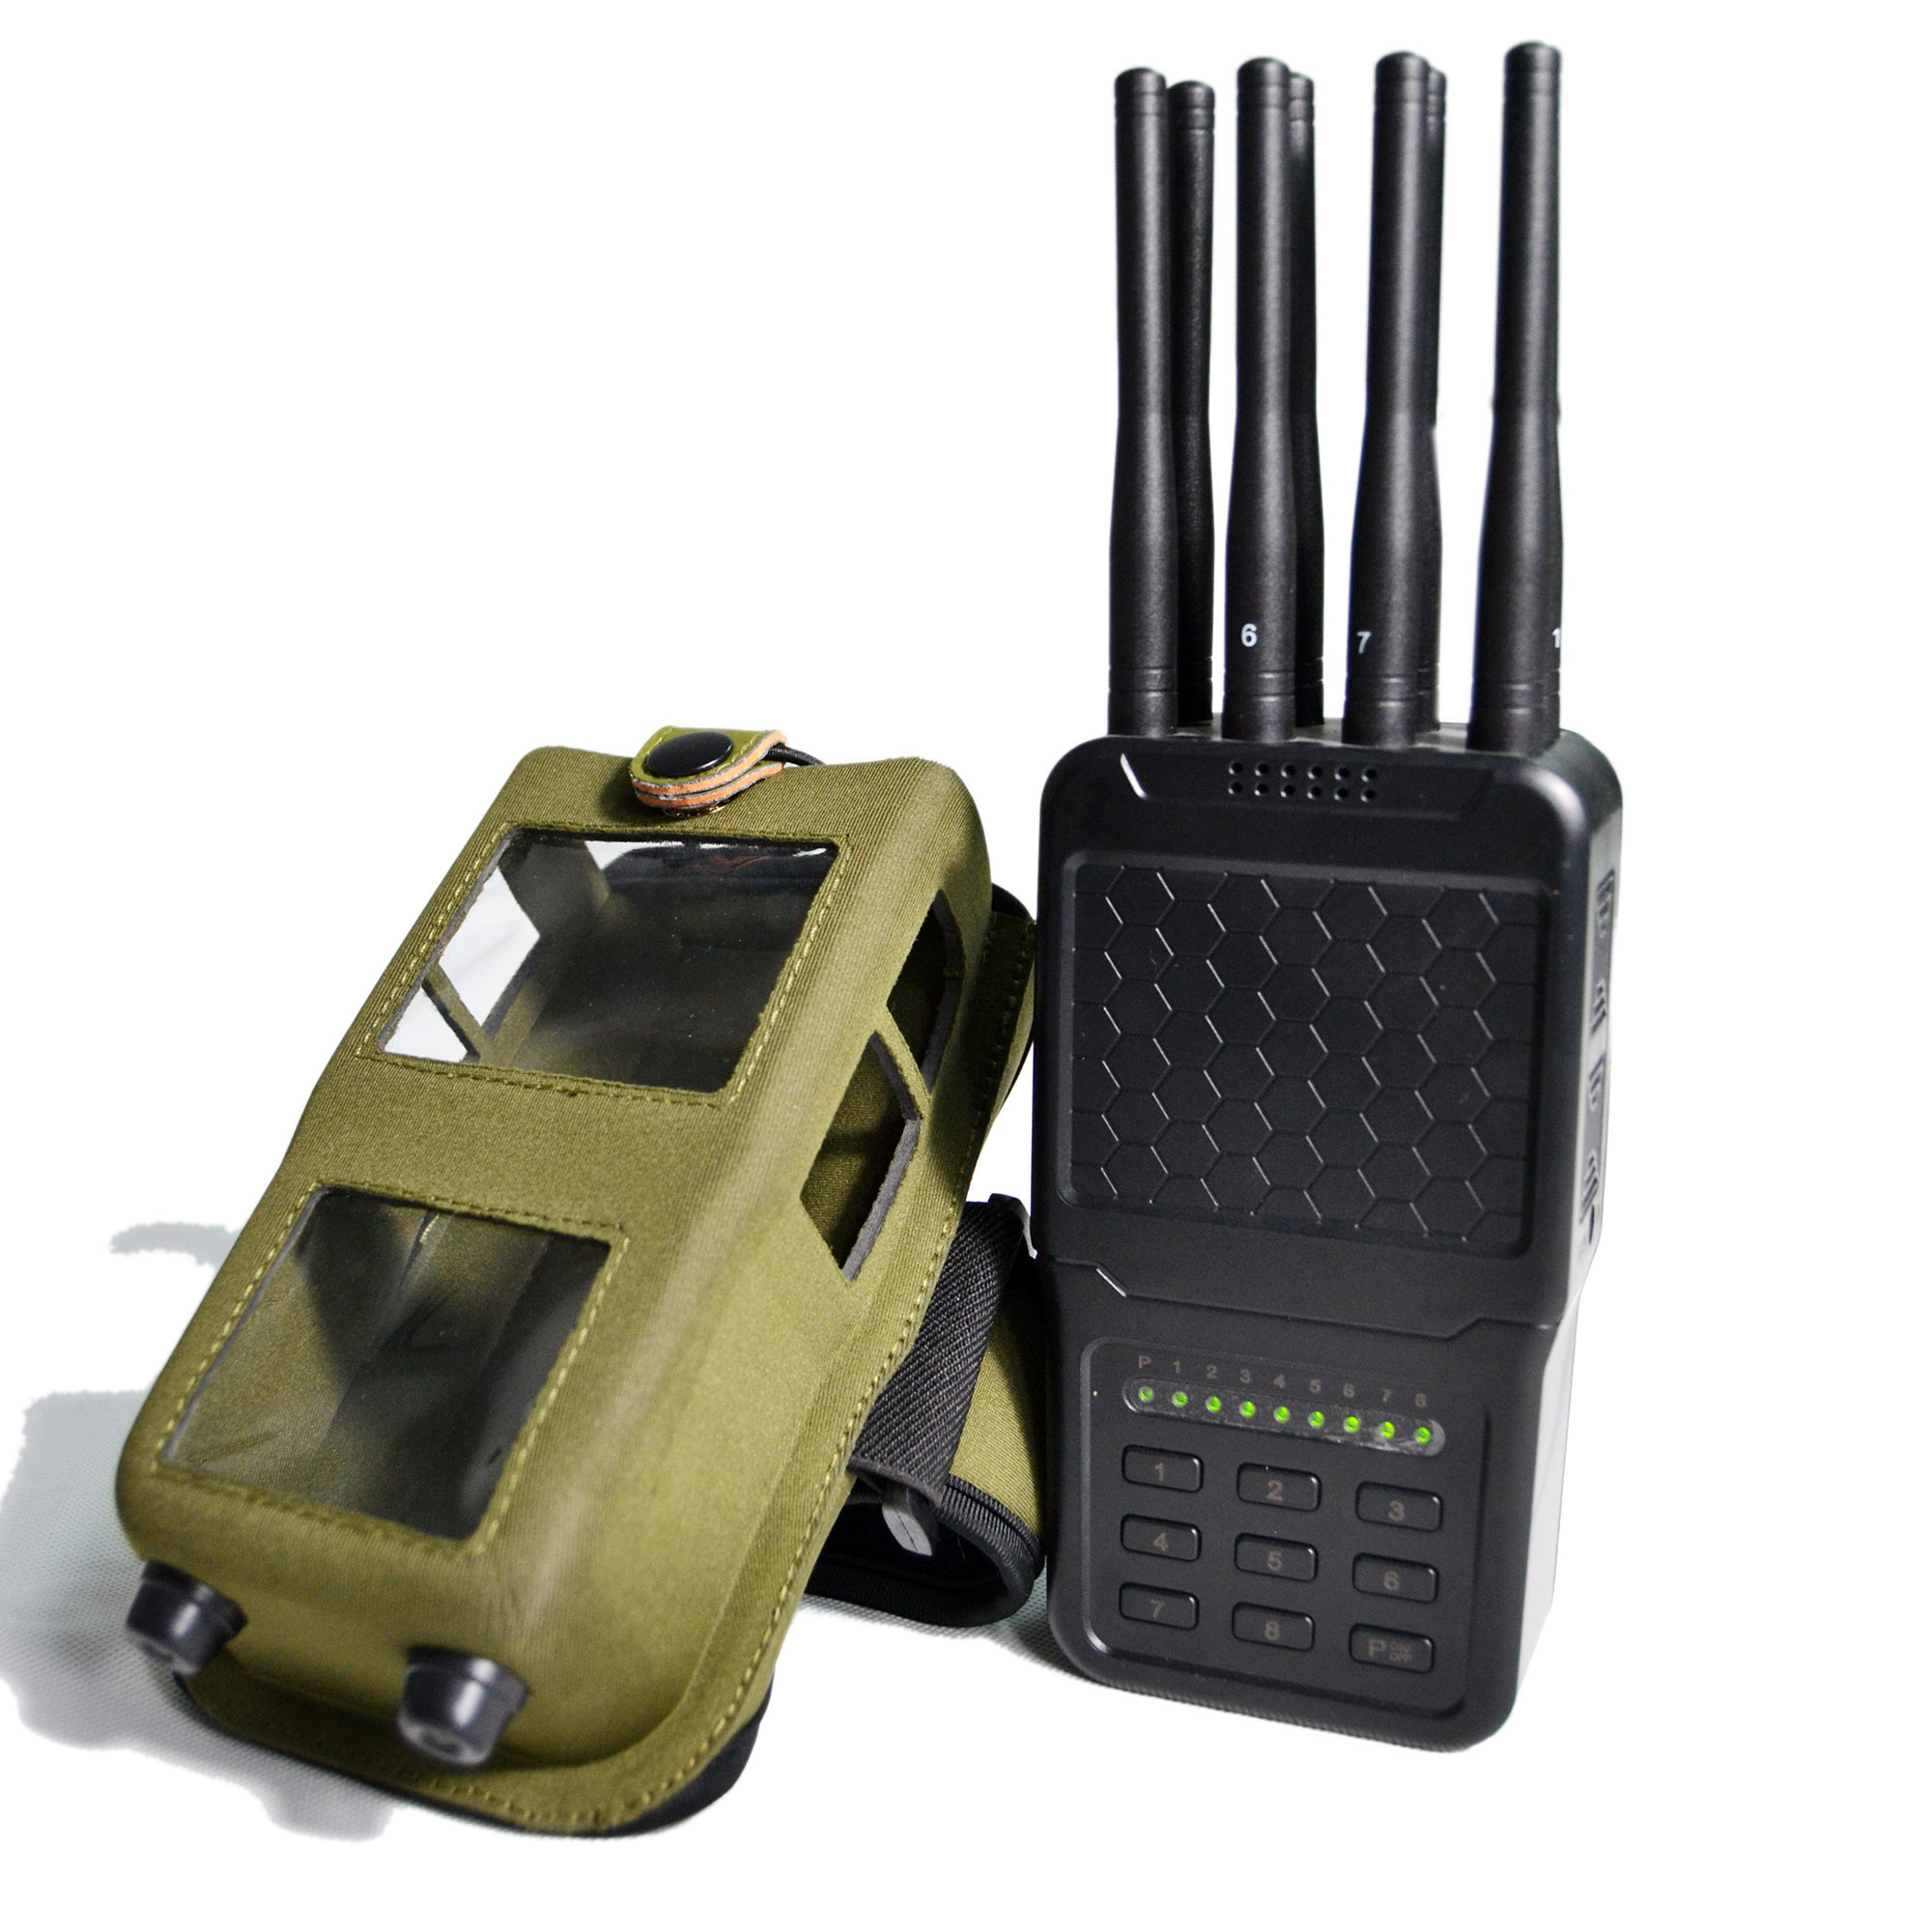 jammer gun owners warehouse - 8 Antenna Handheld Cell Phone Signal Jammer WIFI GPG LOJACK Blockers